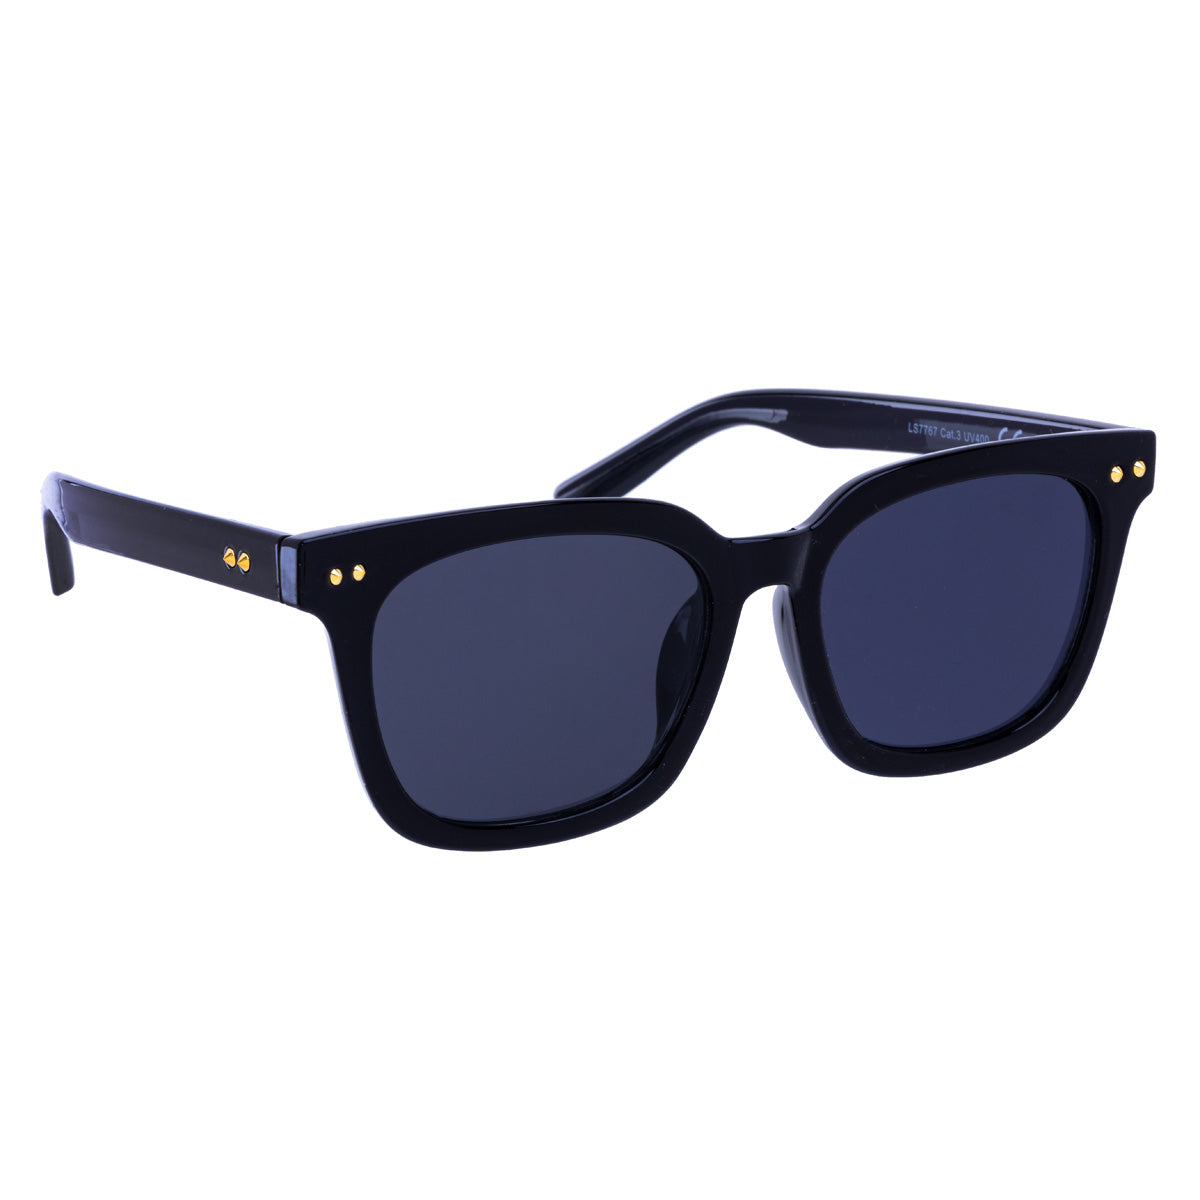 Angular sunglasses with rivet decorations